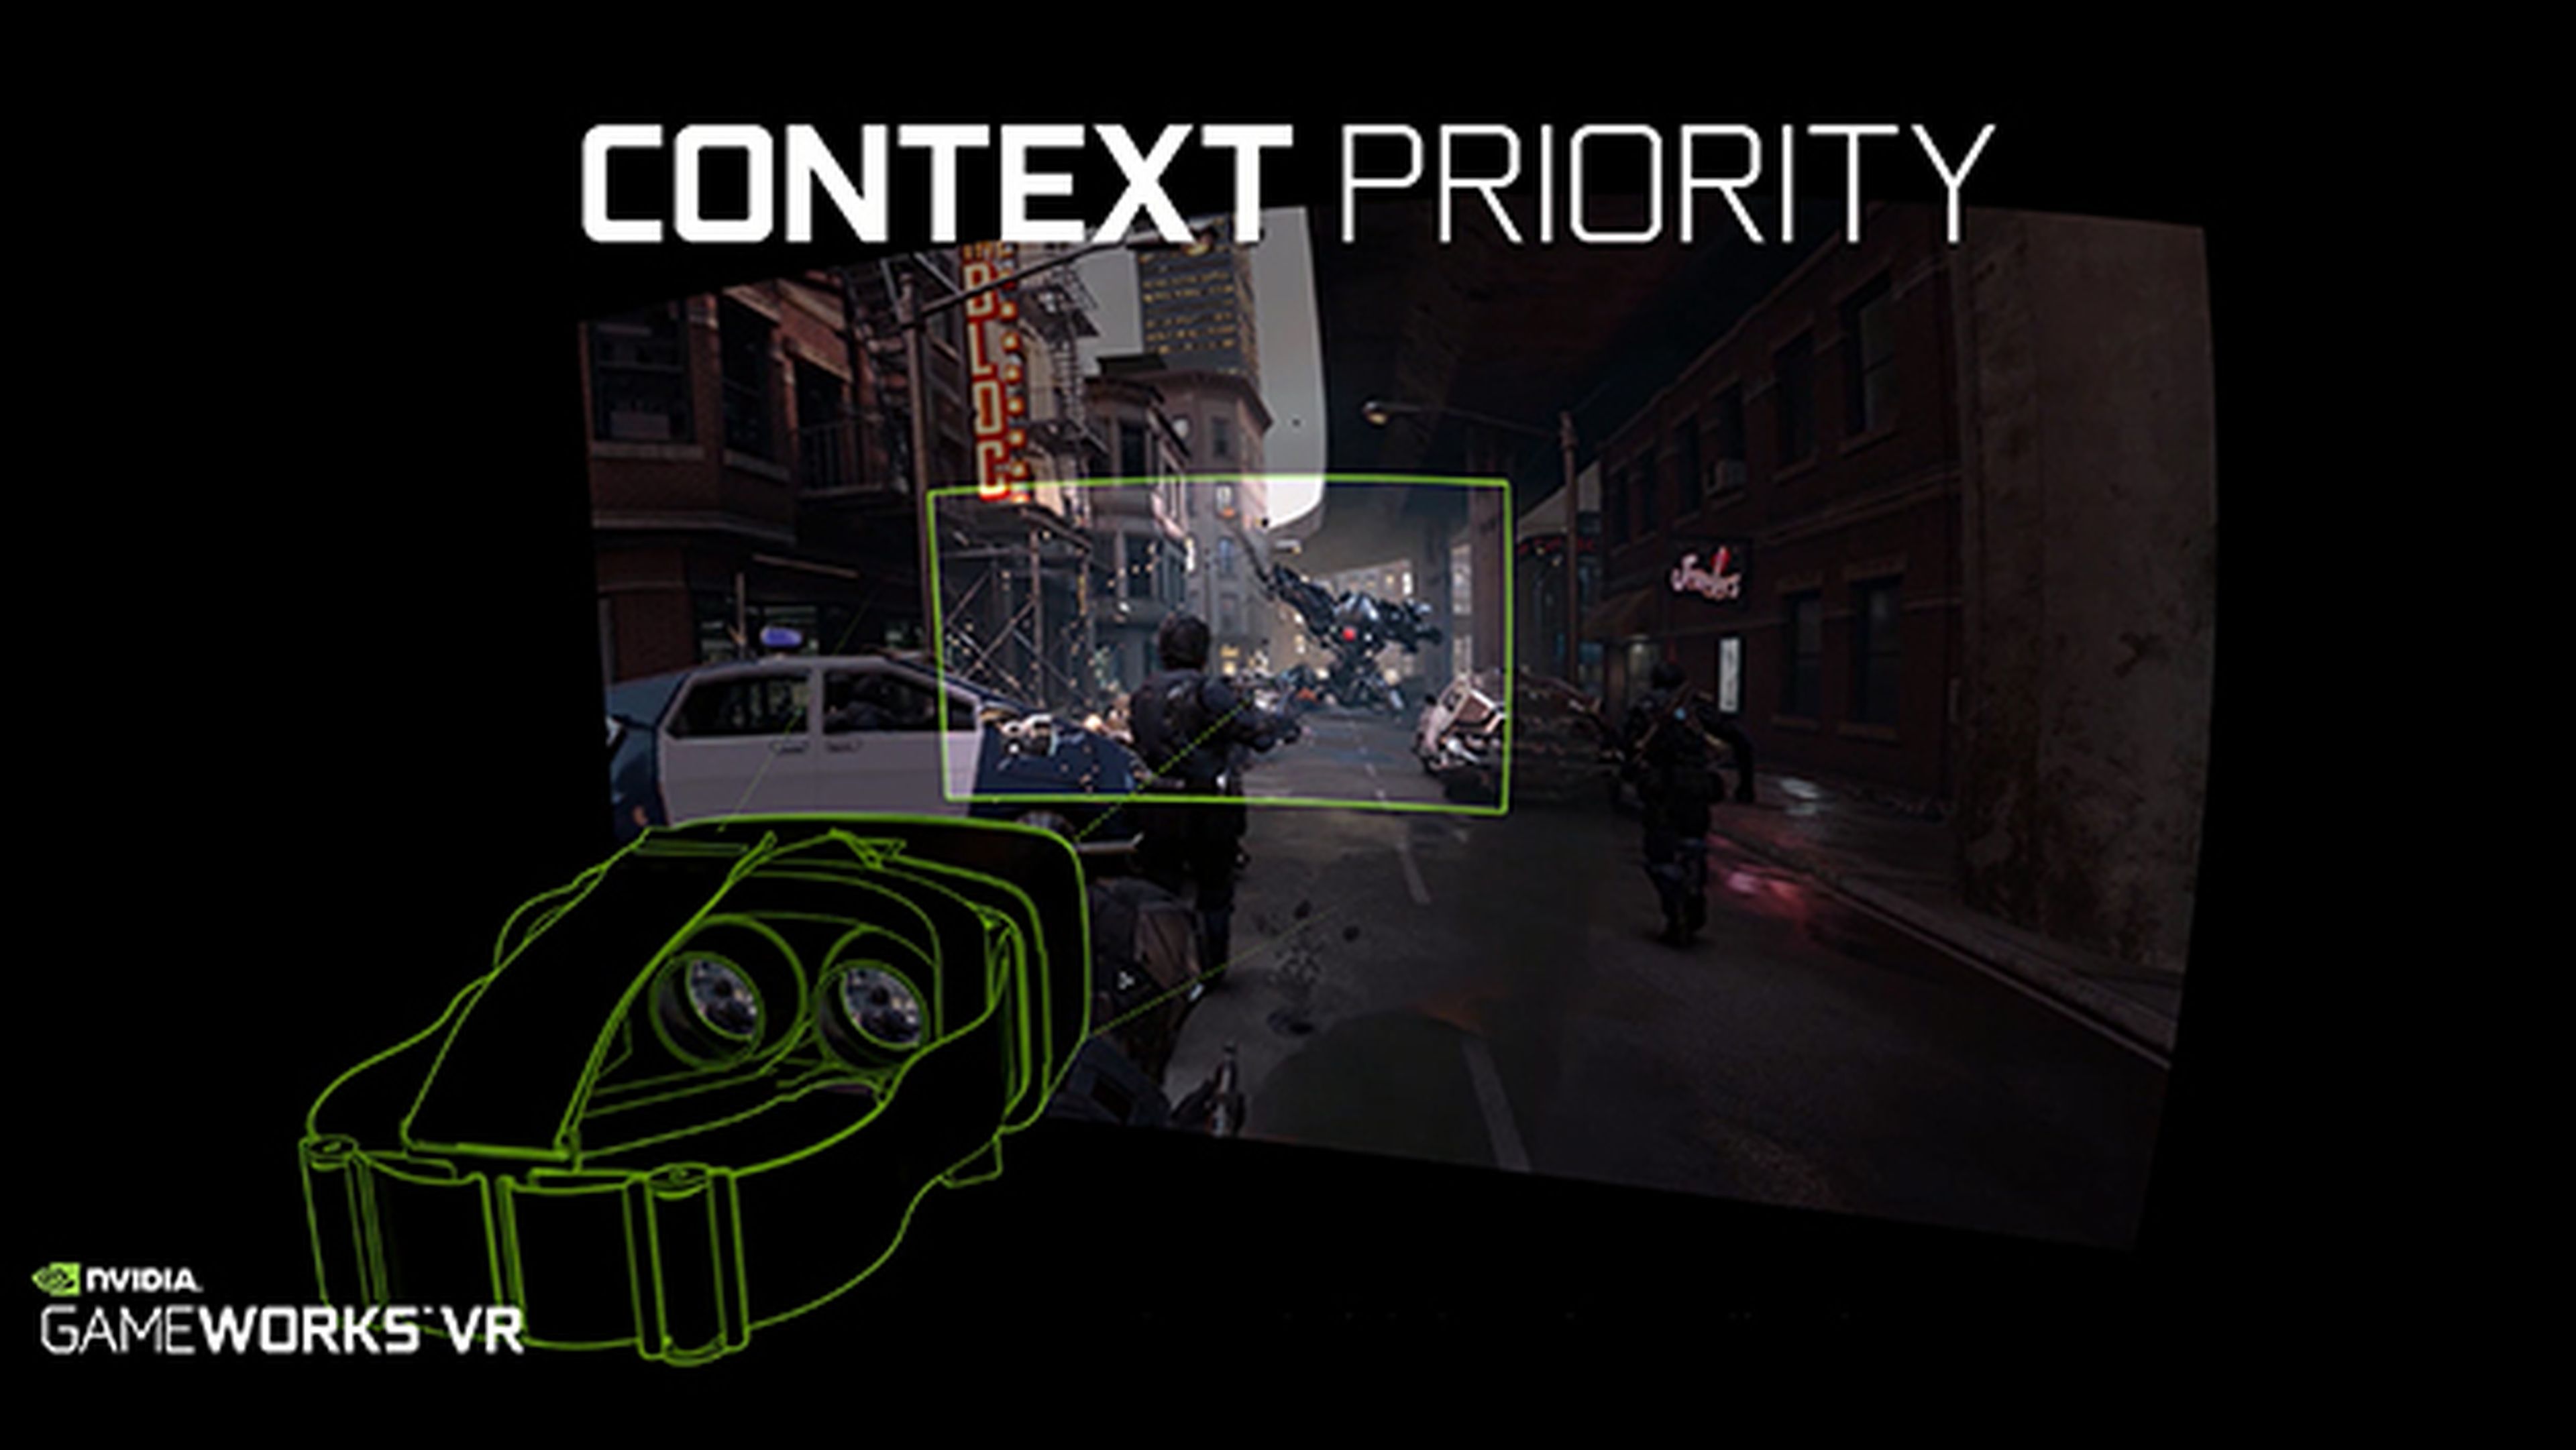 Nvidia Context priority